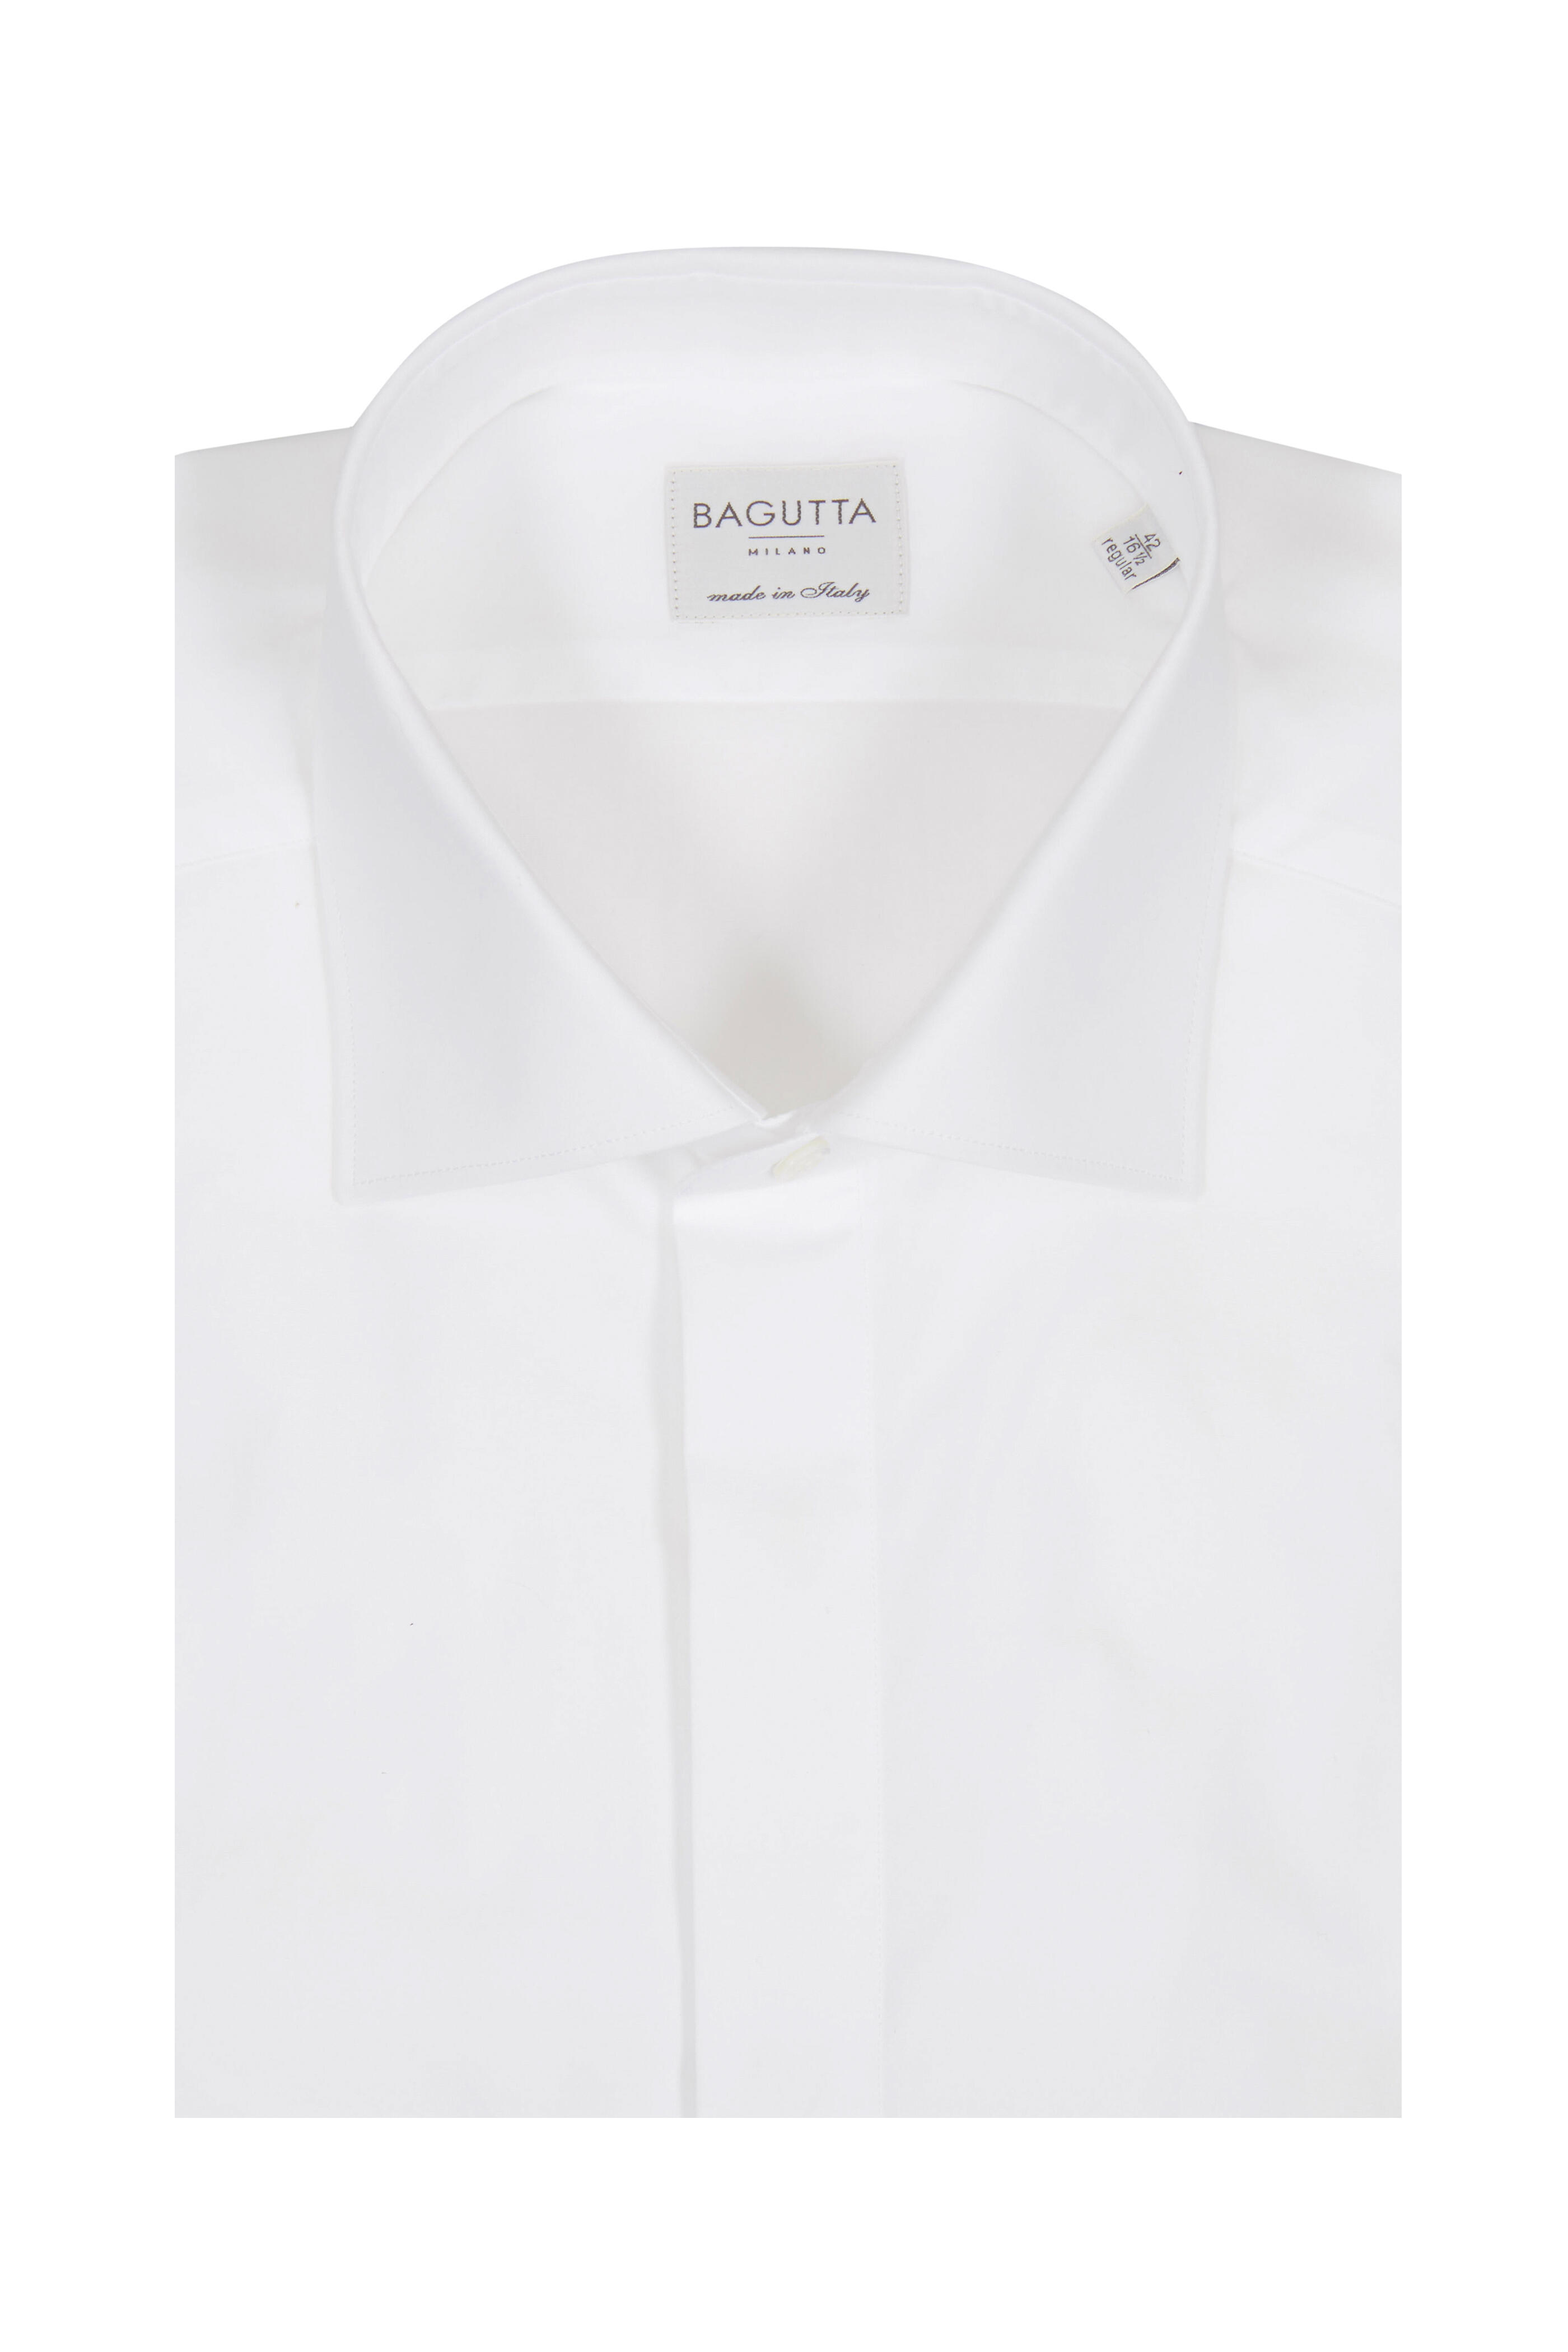 White tuxedo Shirt - Made in Italy